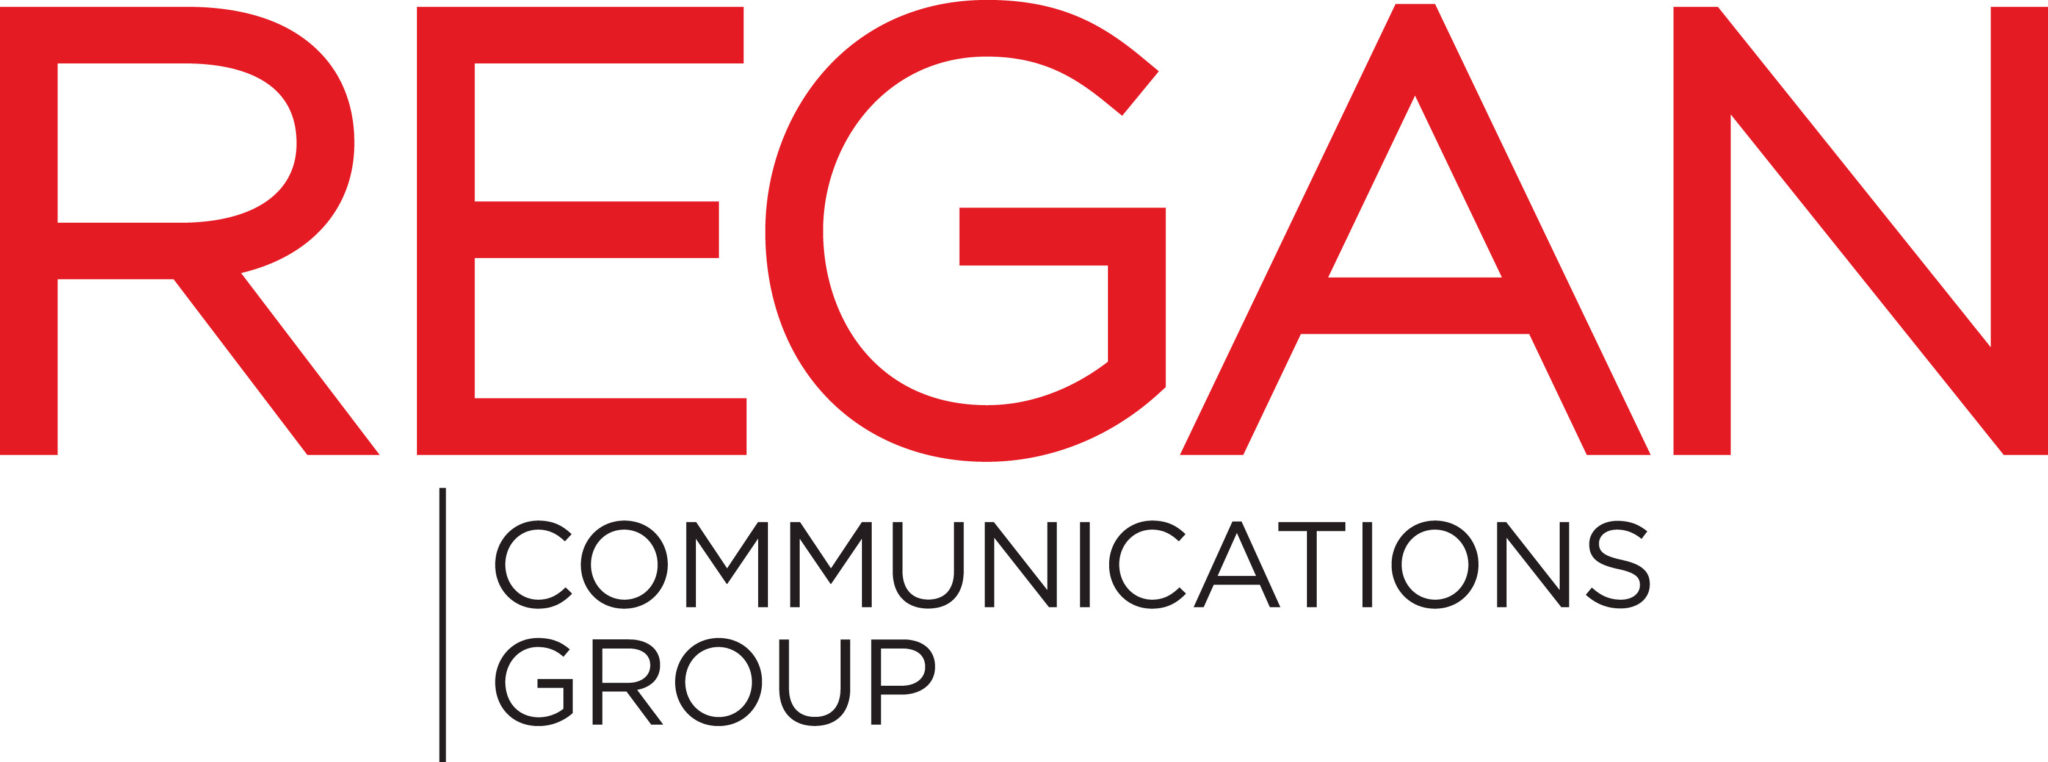 Regan Communications